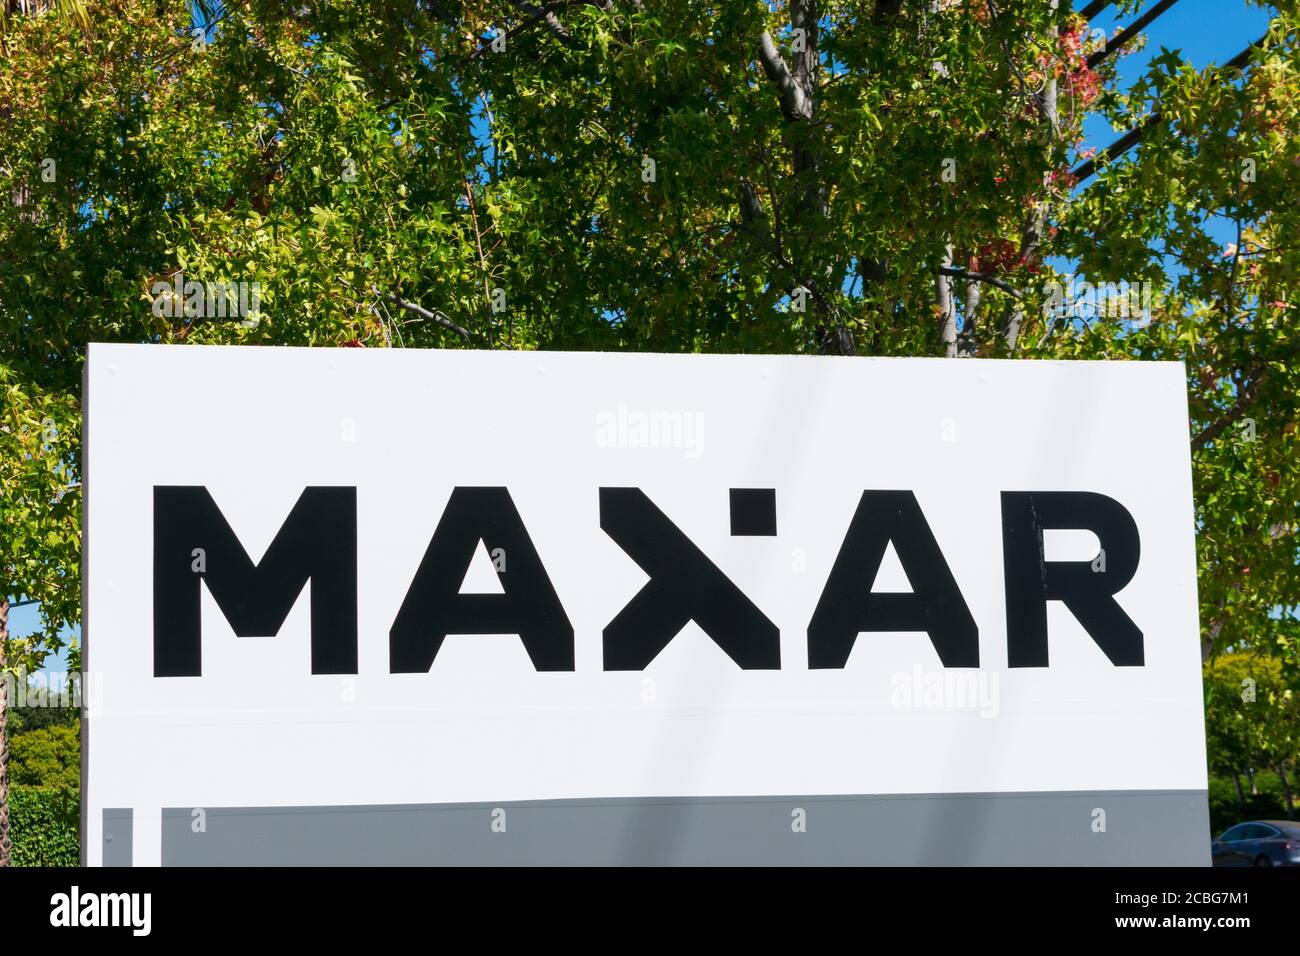 Maxar sign and logo. Maxar Technologies is a space technology company - Palo Alto, California, USA - 2020 Stock Photo